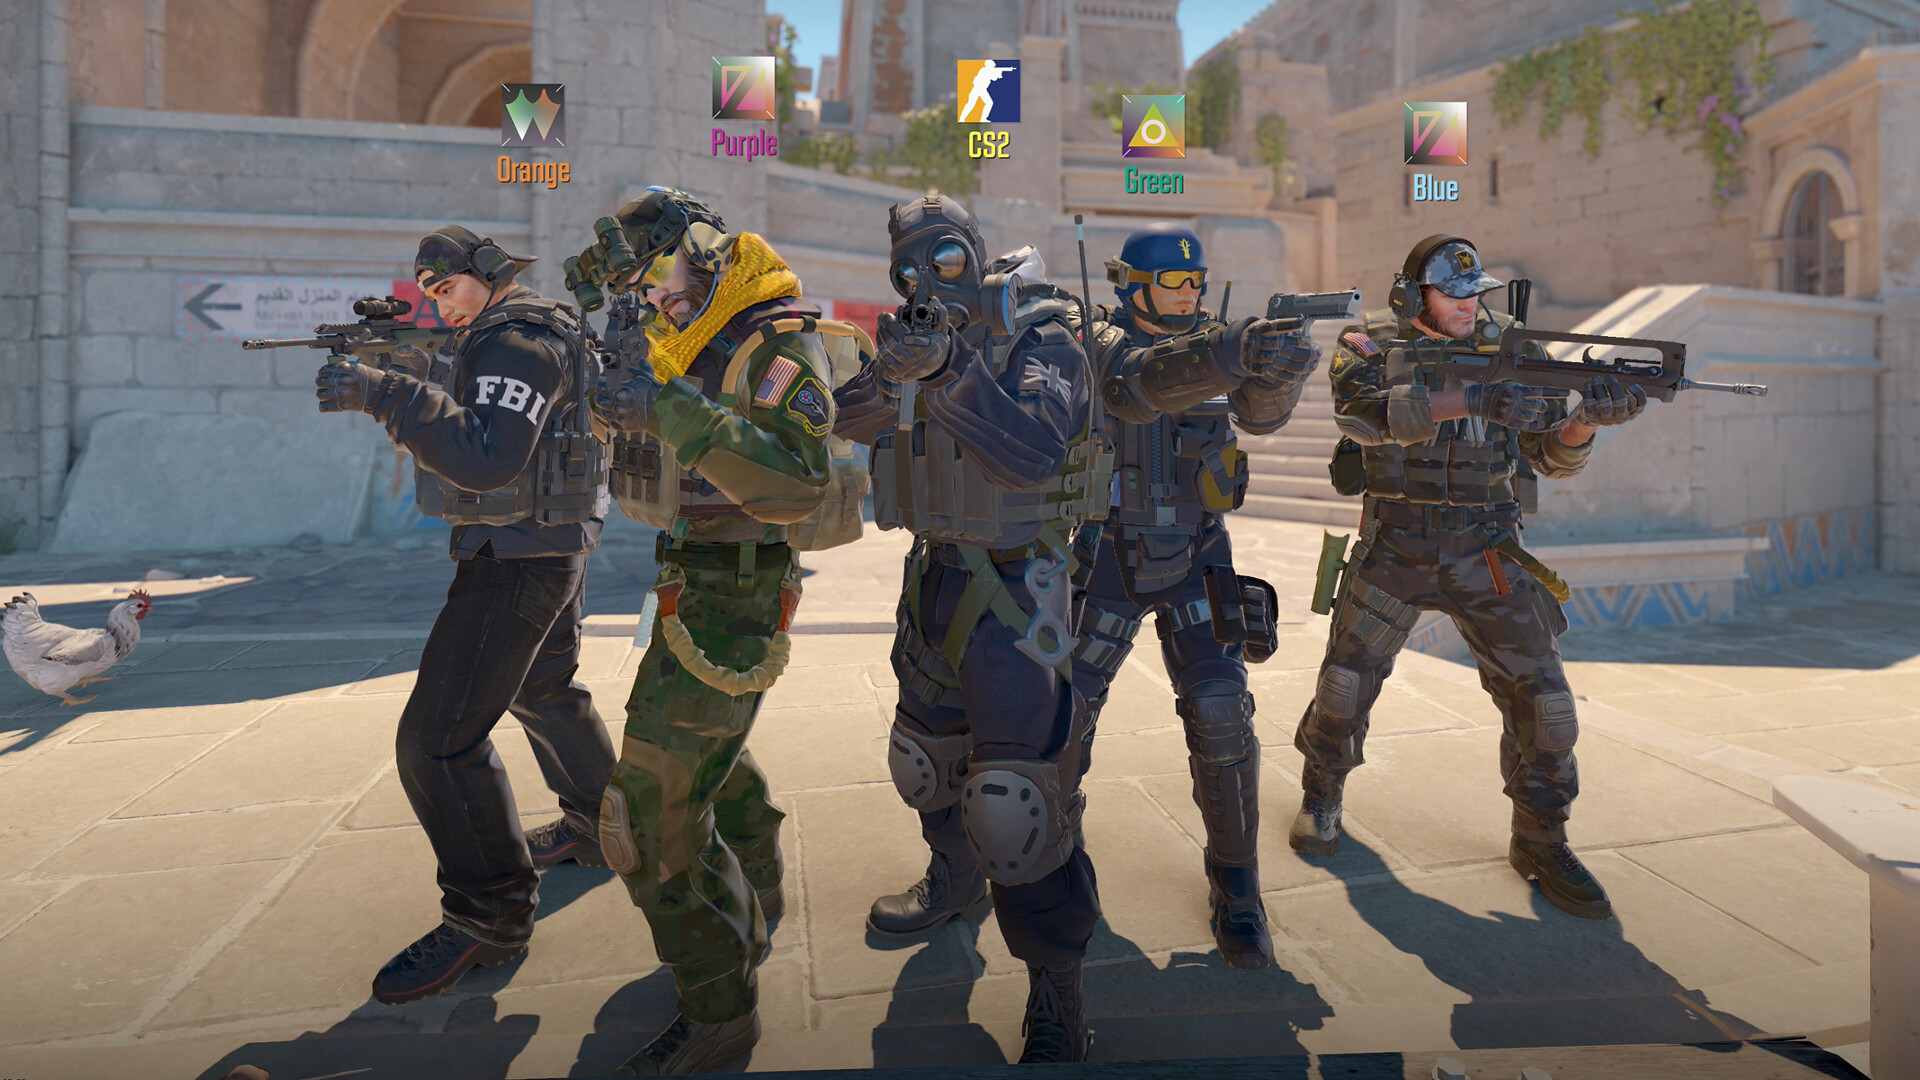 Counter Strike players huddled together